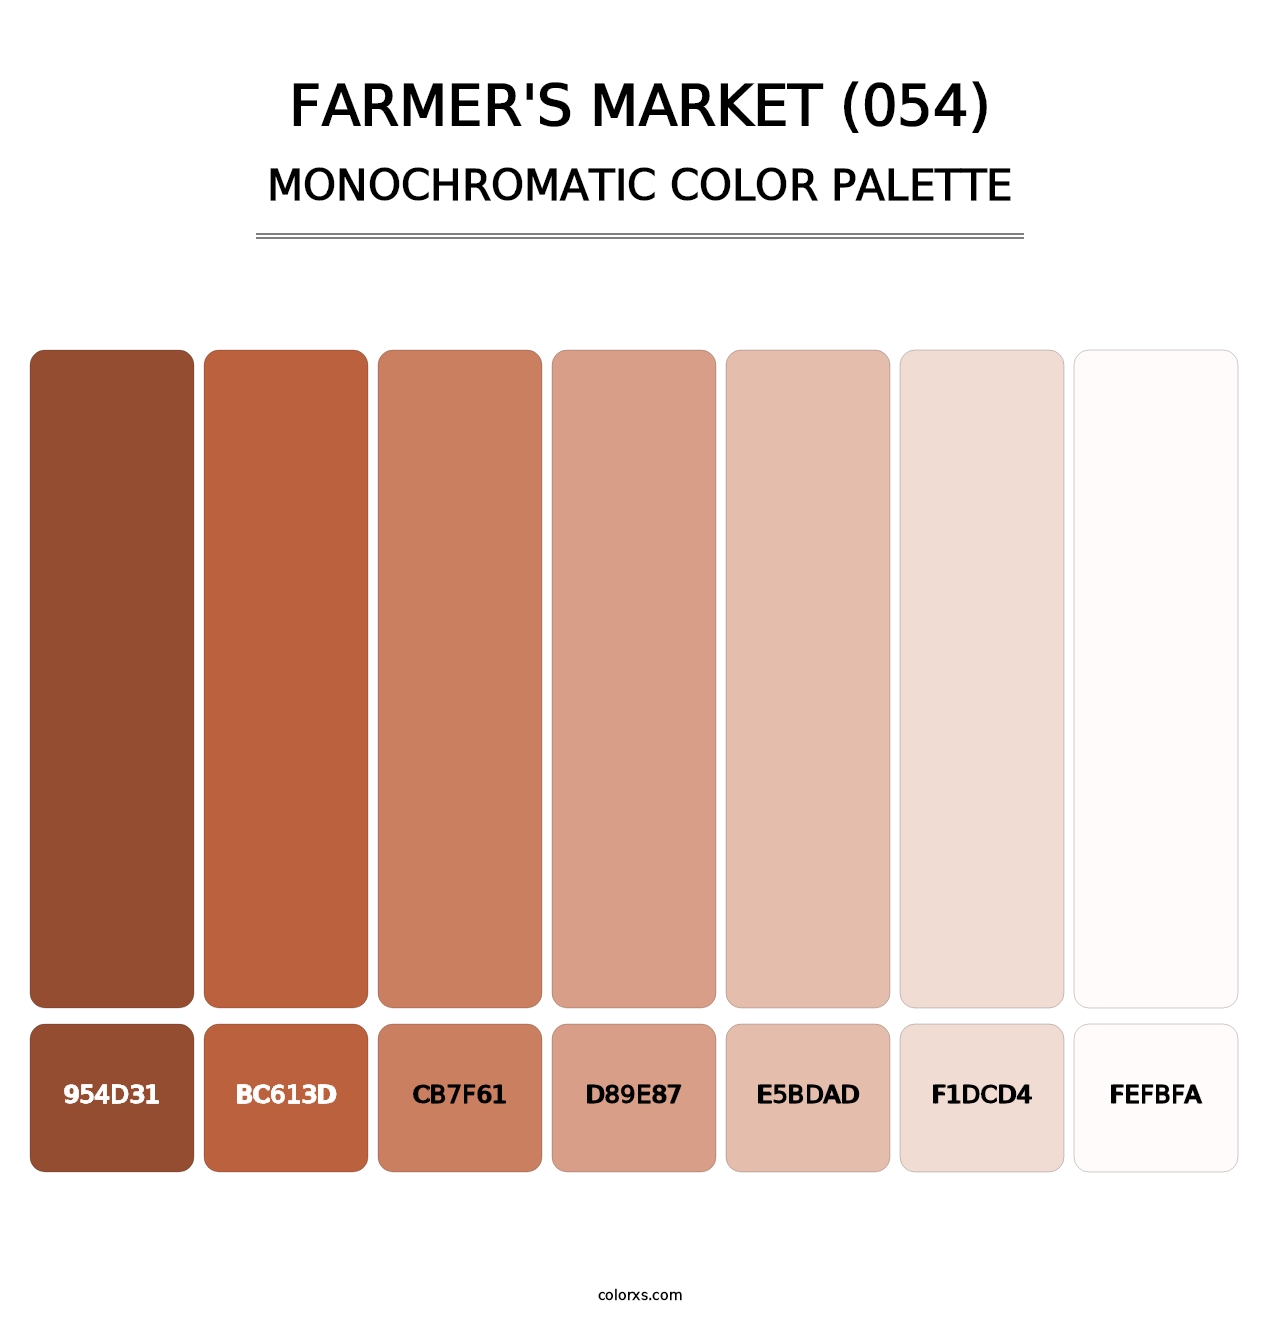 Farmer's Market (054) - Monochromatic Color Palette